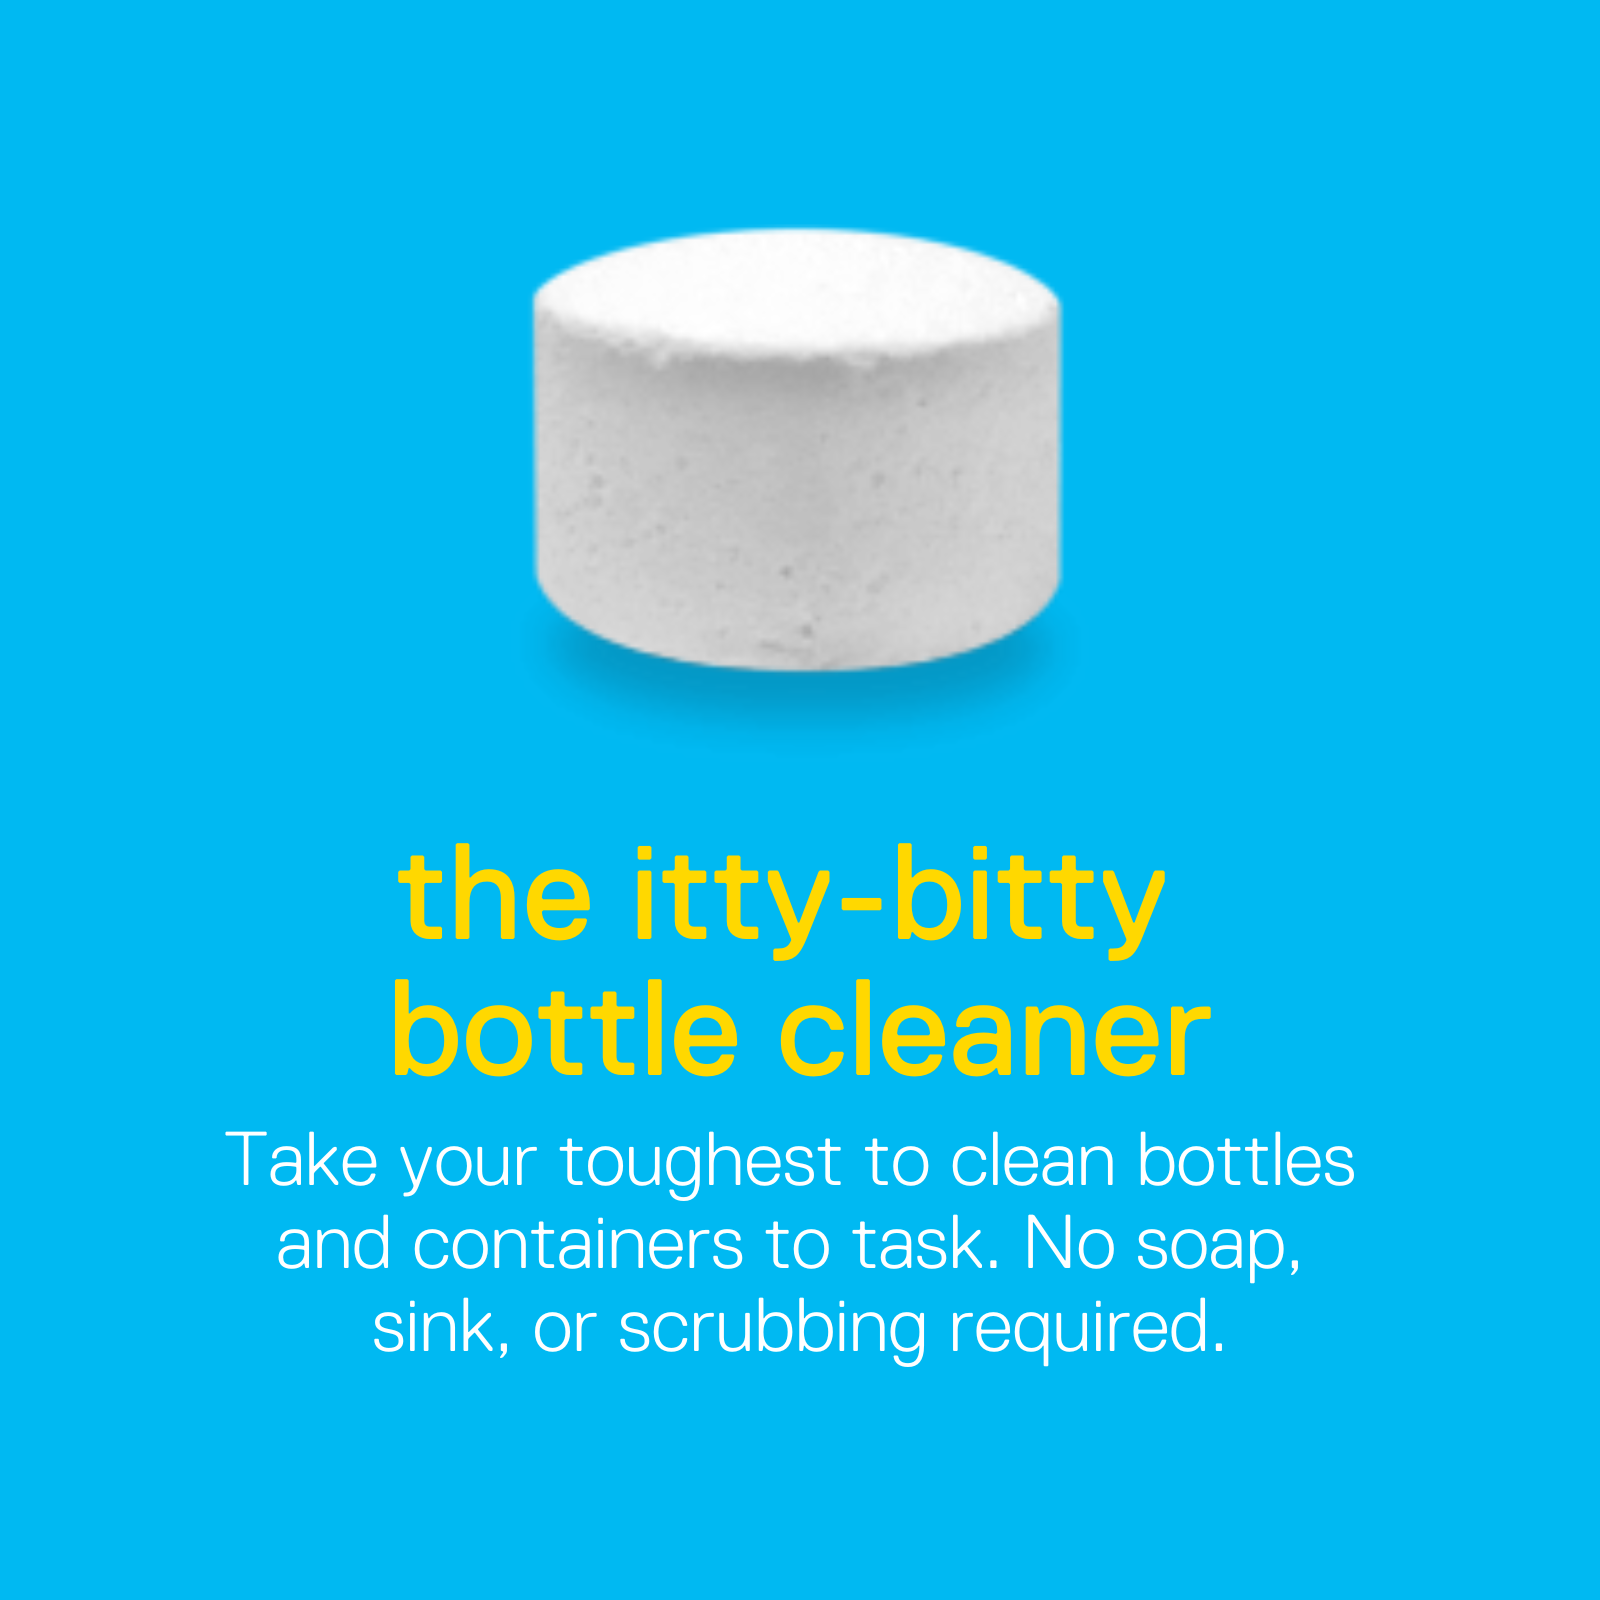 Bottle Bright® Bottle Cleaning Tablets (12pk)